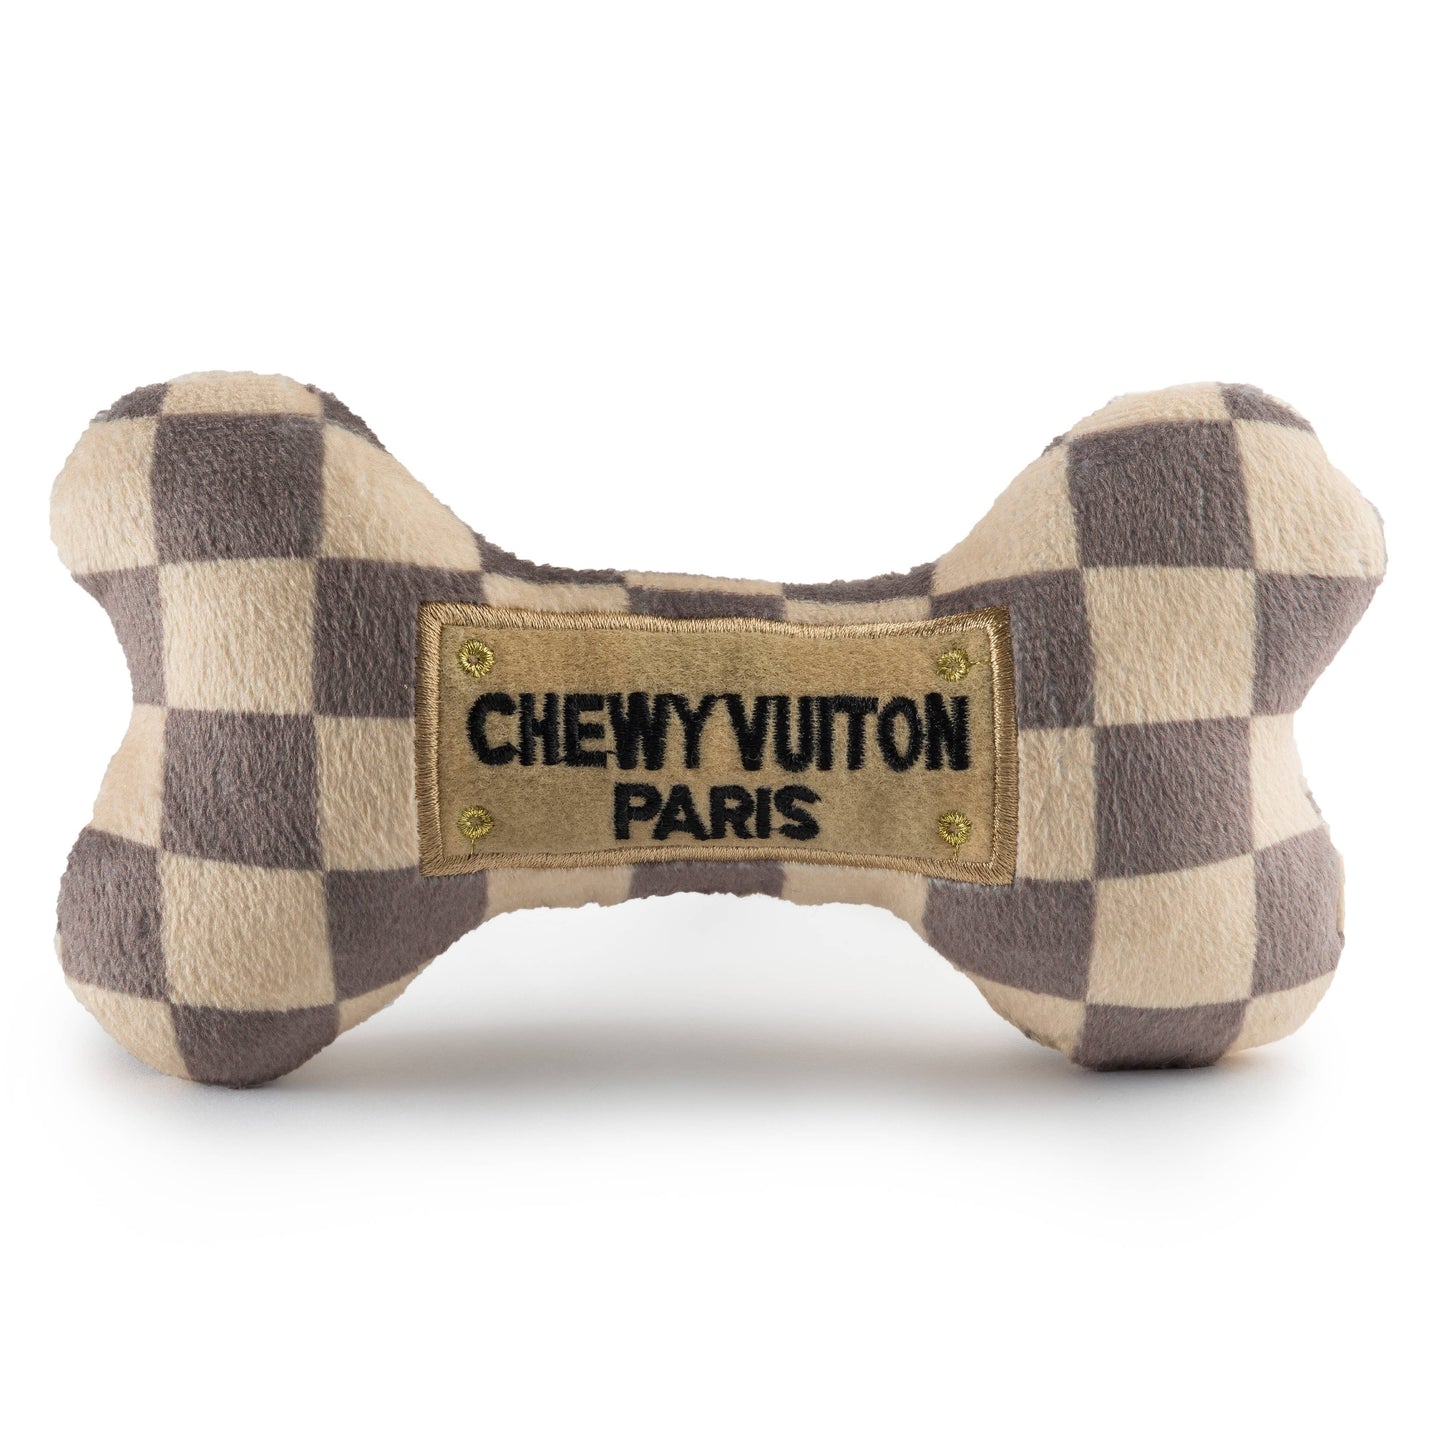 Checker Chewy Vuiton Bones Squeaker Dog Toy: Small / Mini